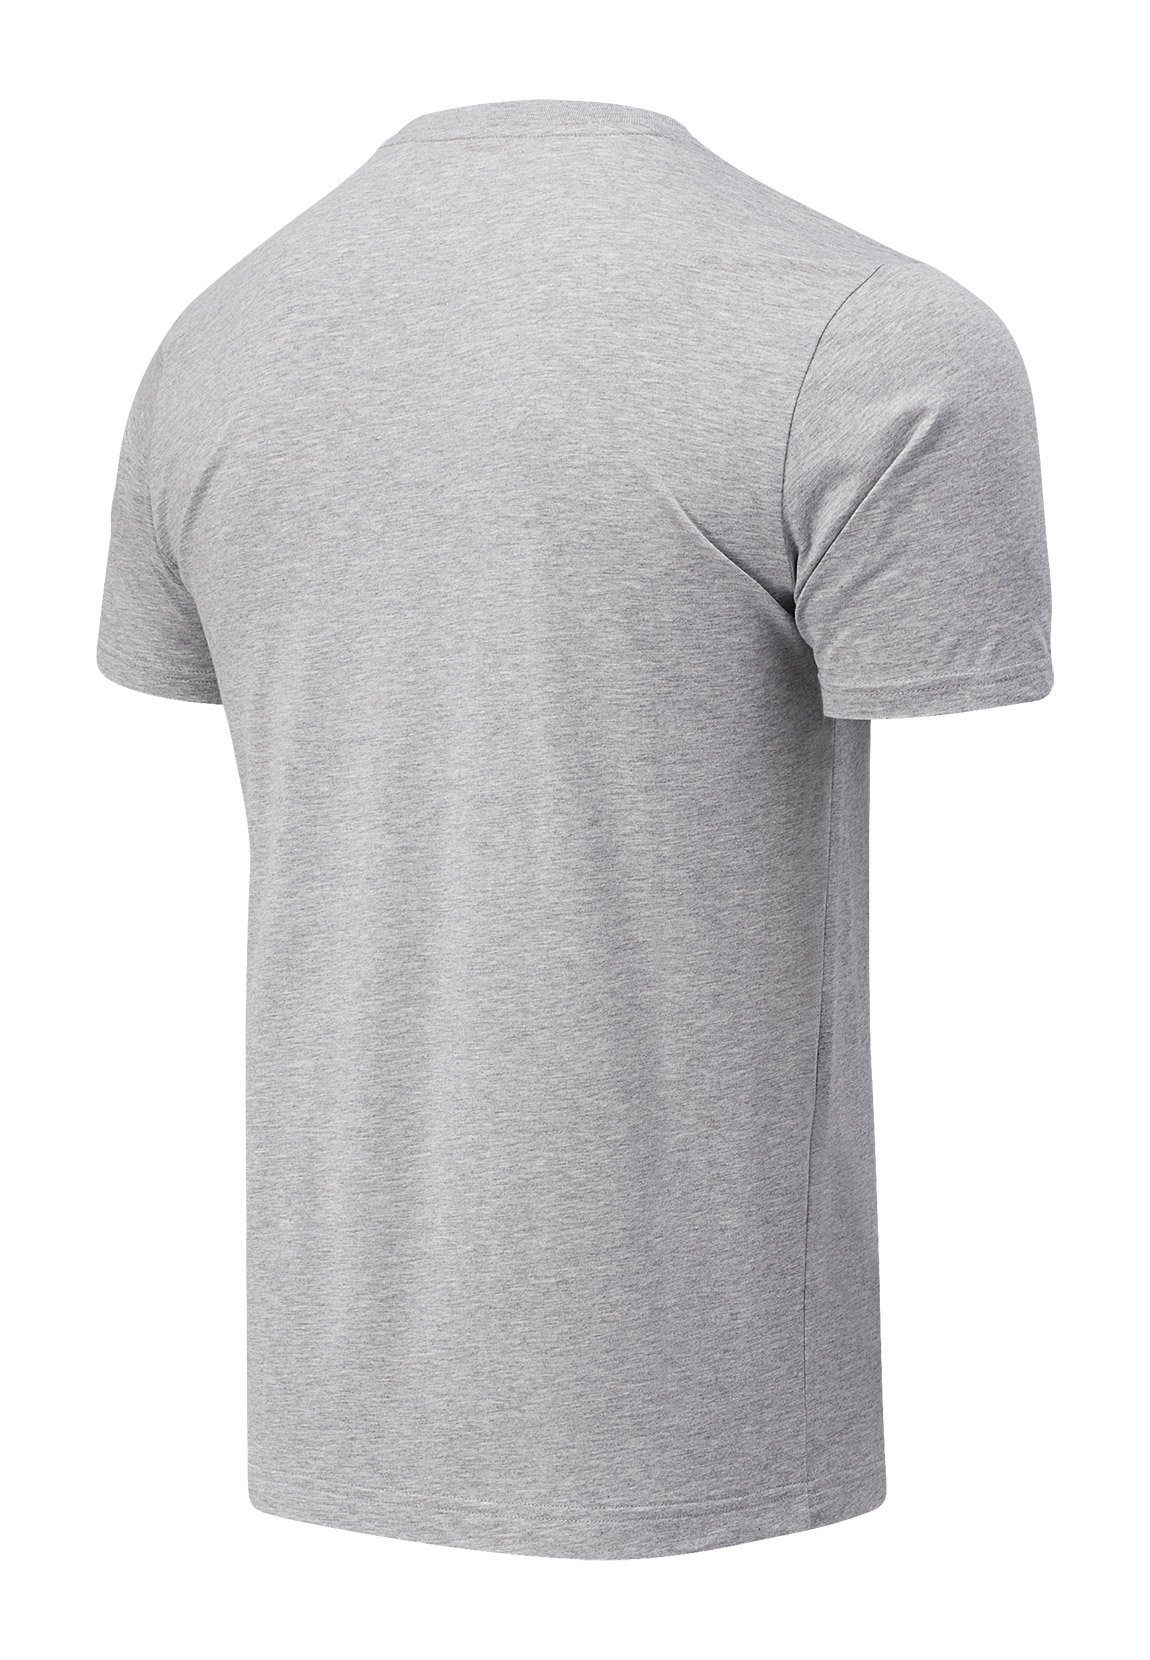 LOGO CORE AG T-Shirt TEE Grey New Balance New Athletic CLASSIC ATHLGREY MT03905 Balance T-Shirt Gau